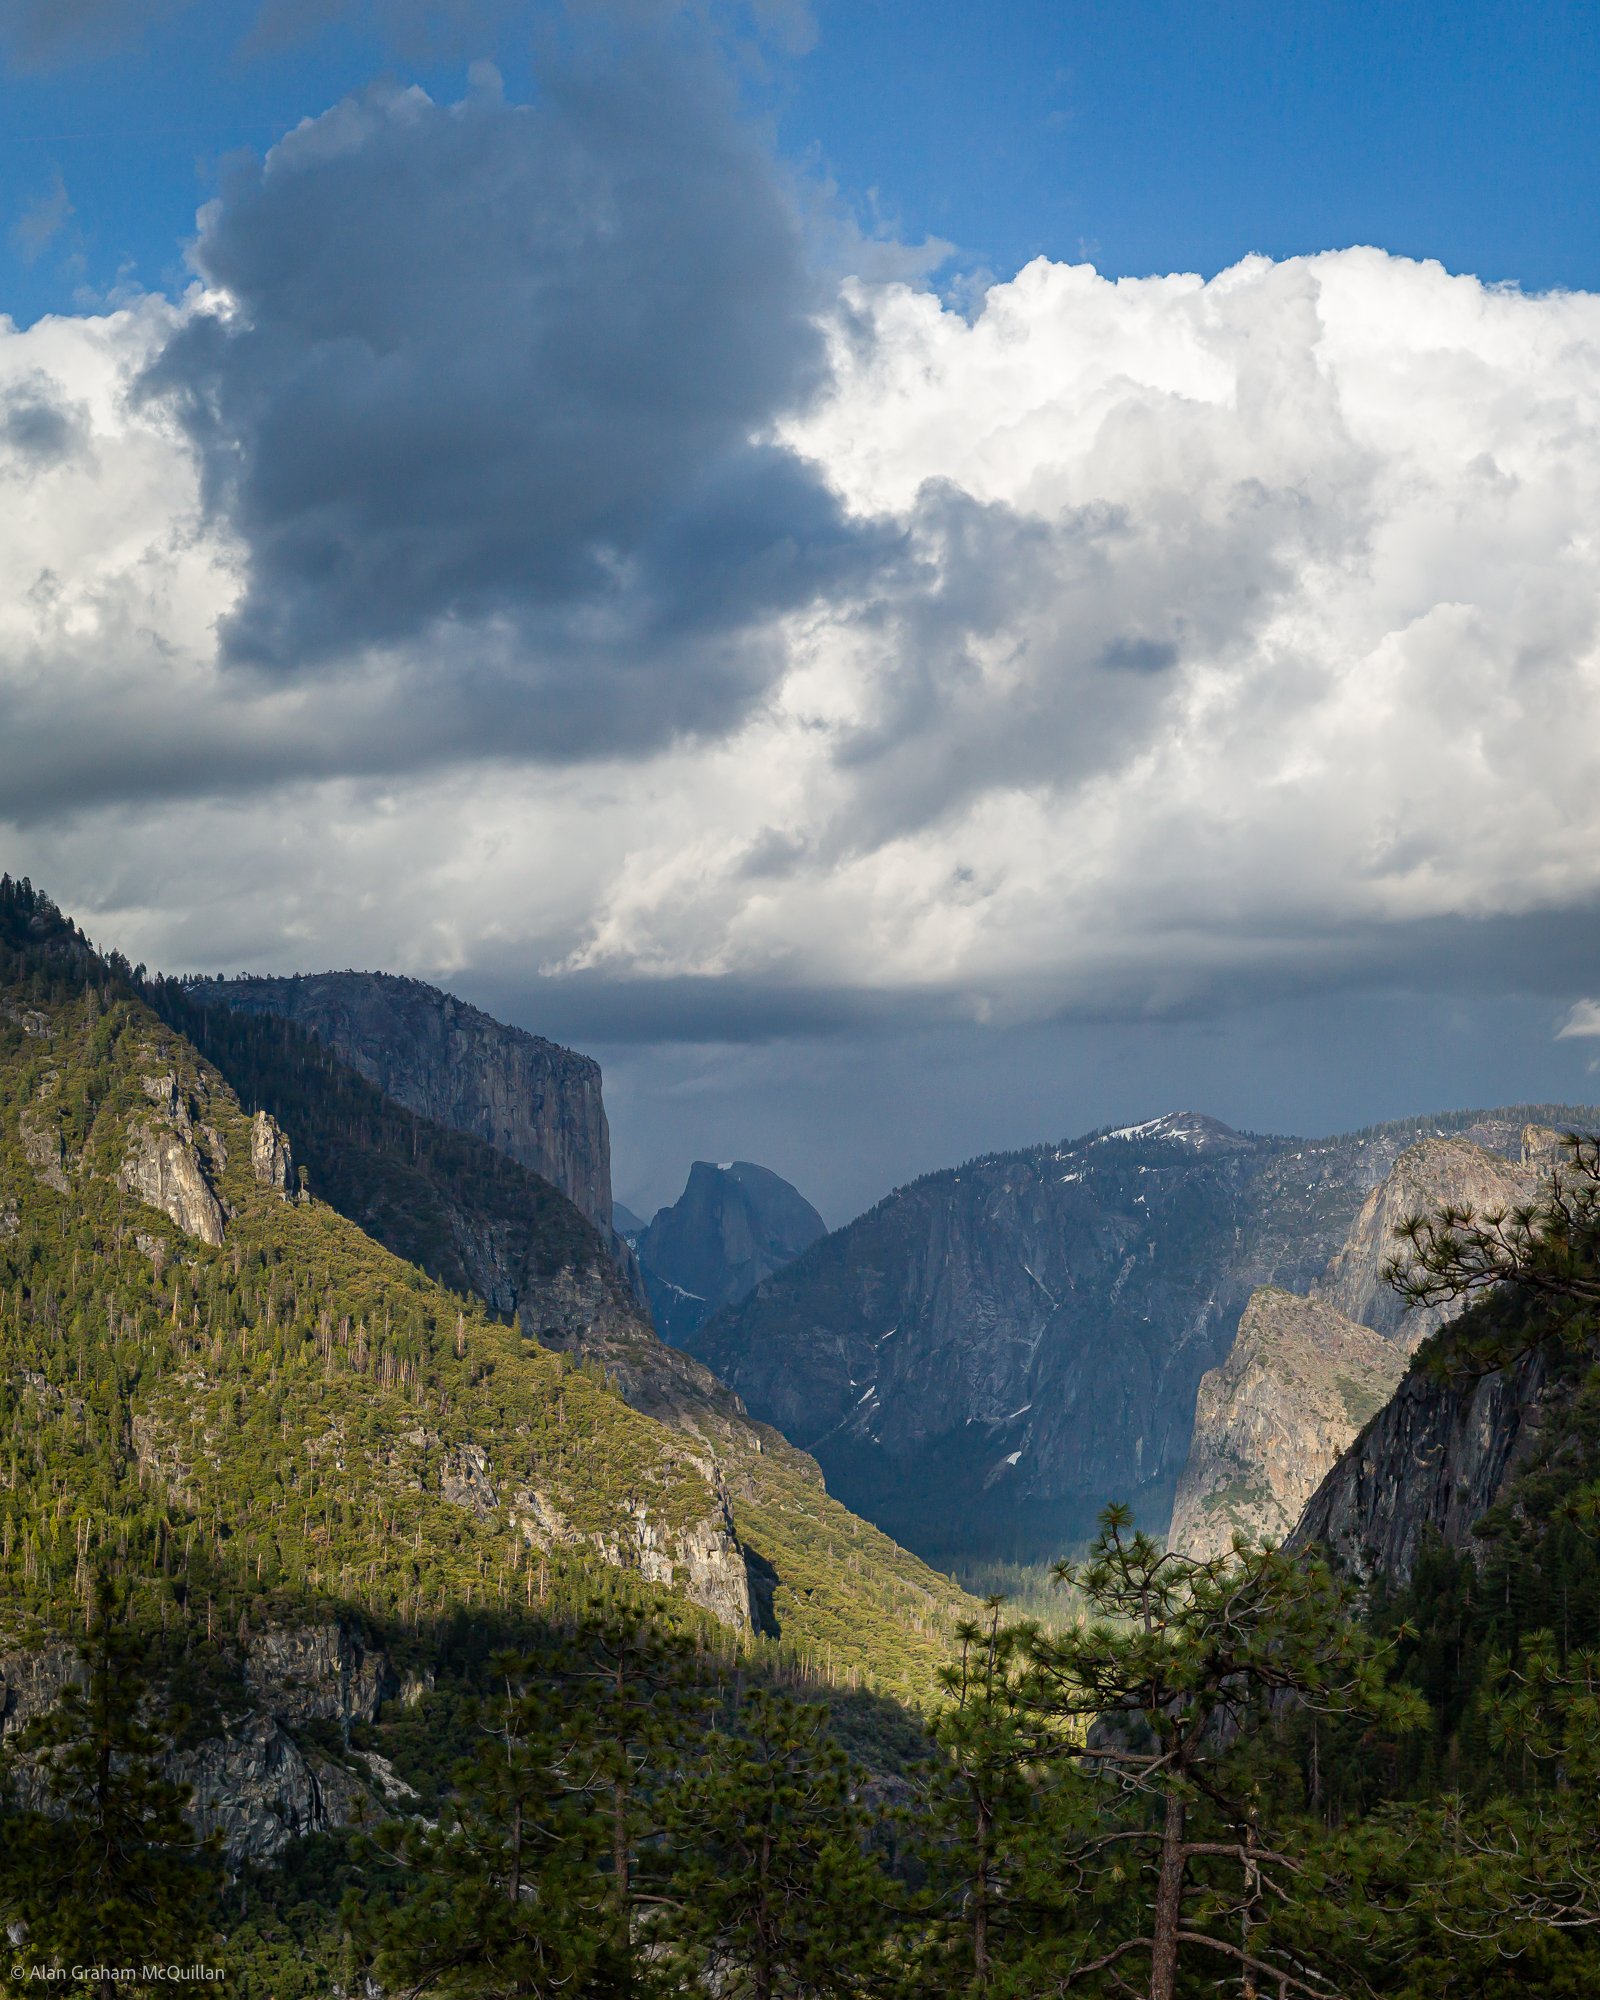 El Capitan and Half dome, Yosemite National Park, California